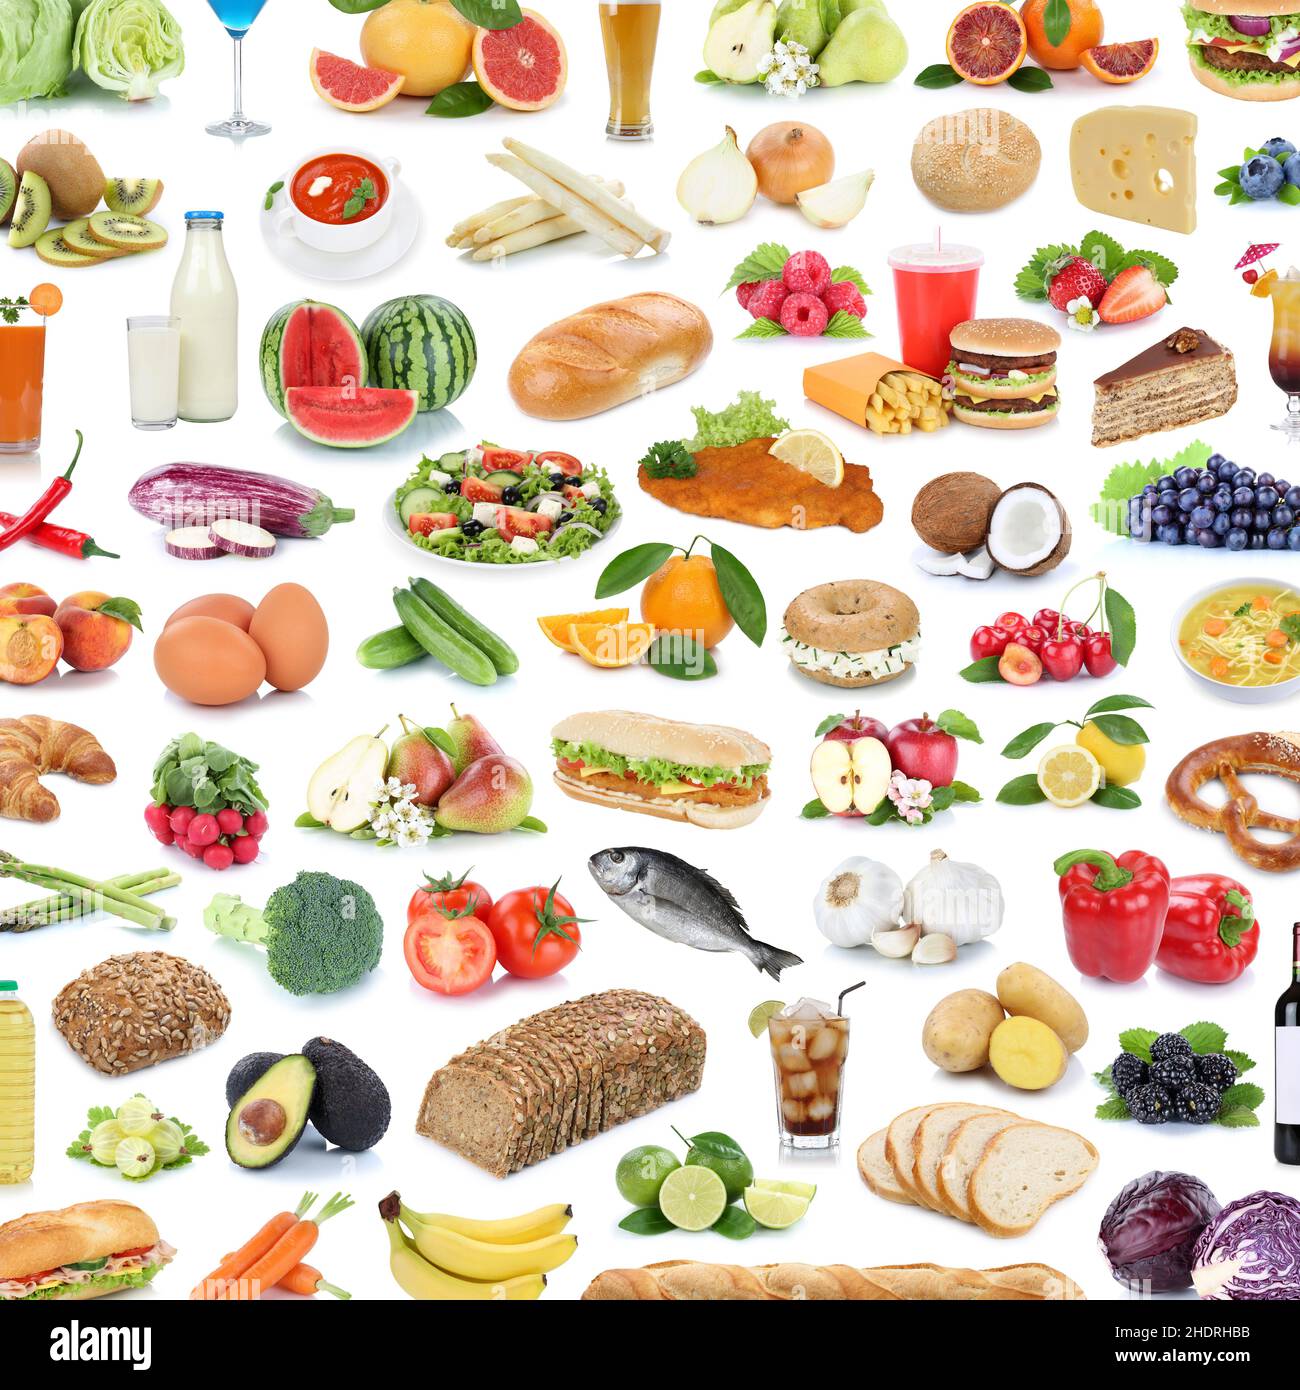 Lebensmittel, Collage, Lebensmittel, Collagen Stockfotografie - Alamy